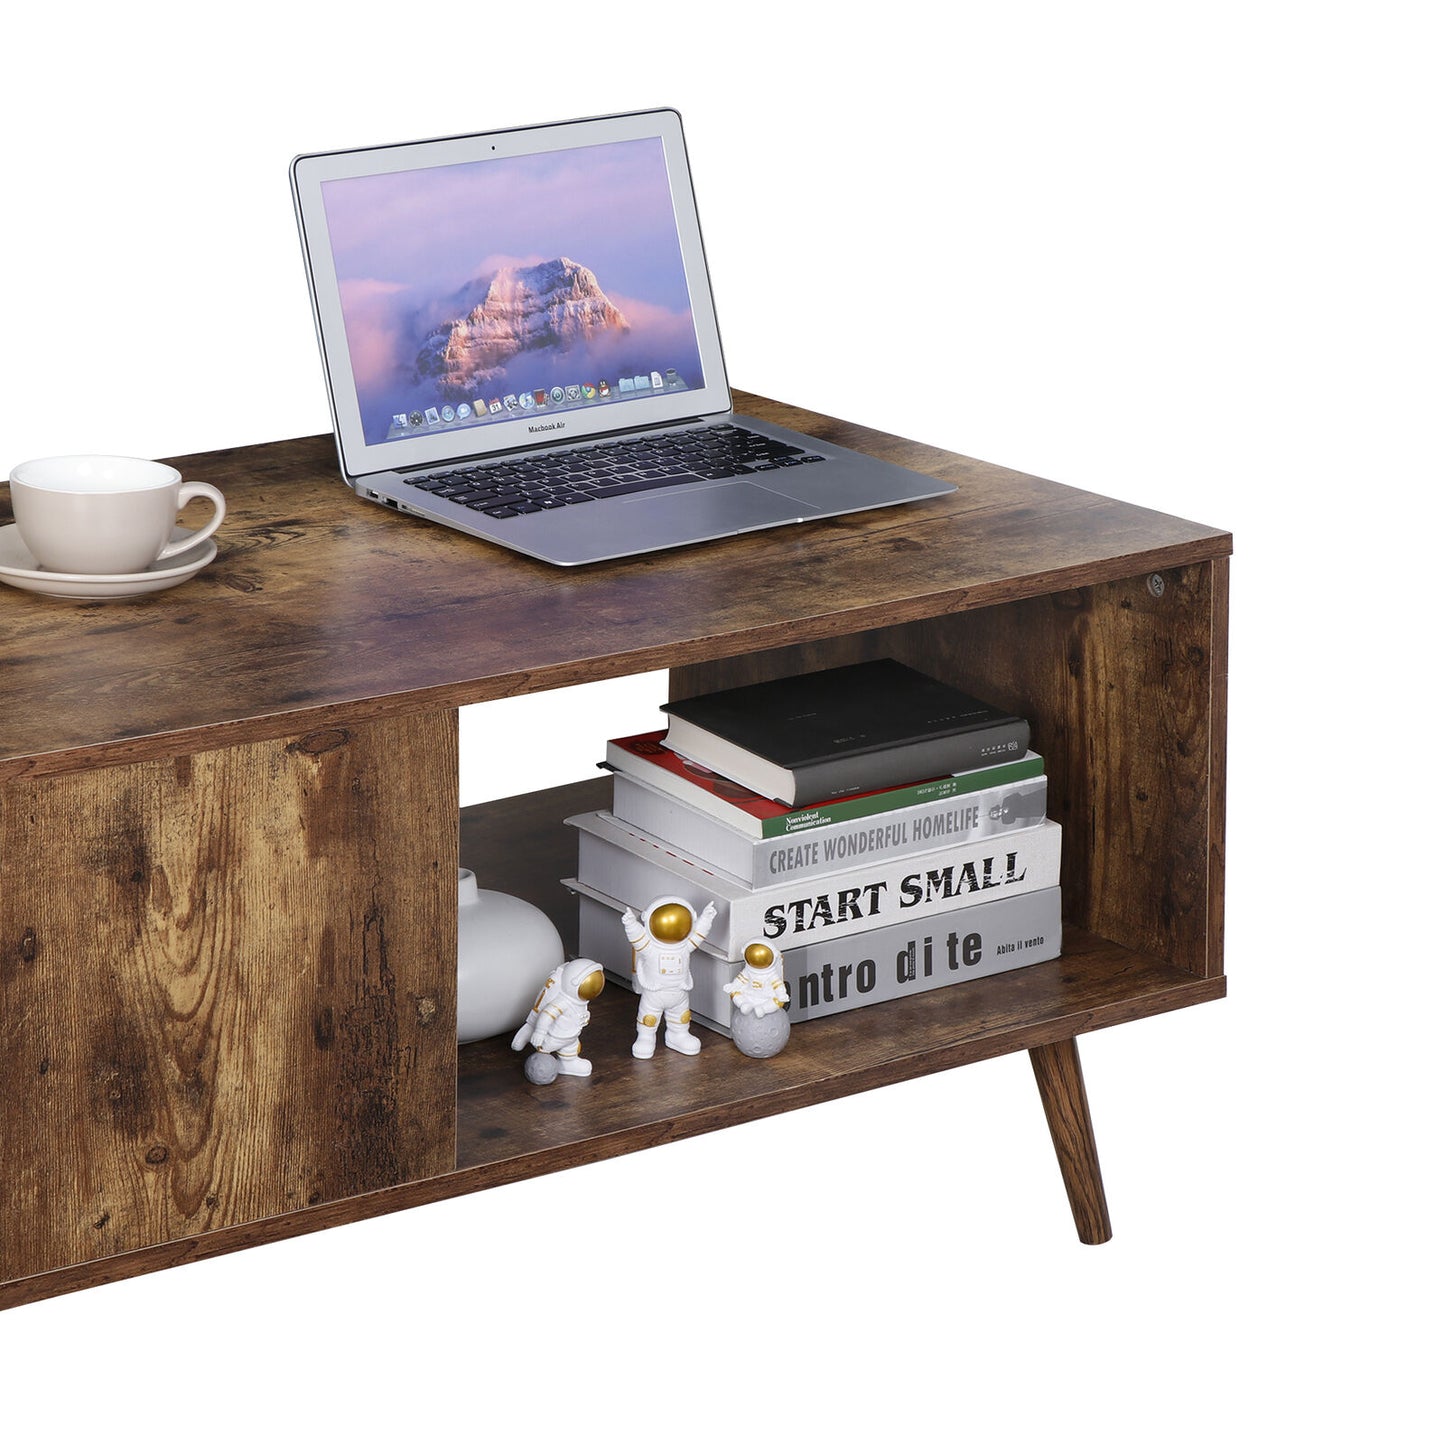 Retro Rectangular Coffee Tea Table Wooden Open Storage Shelf For Living Room